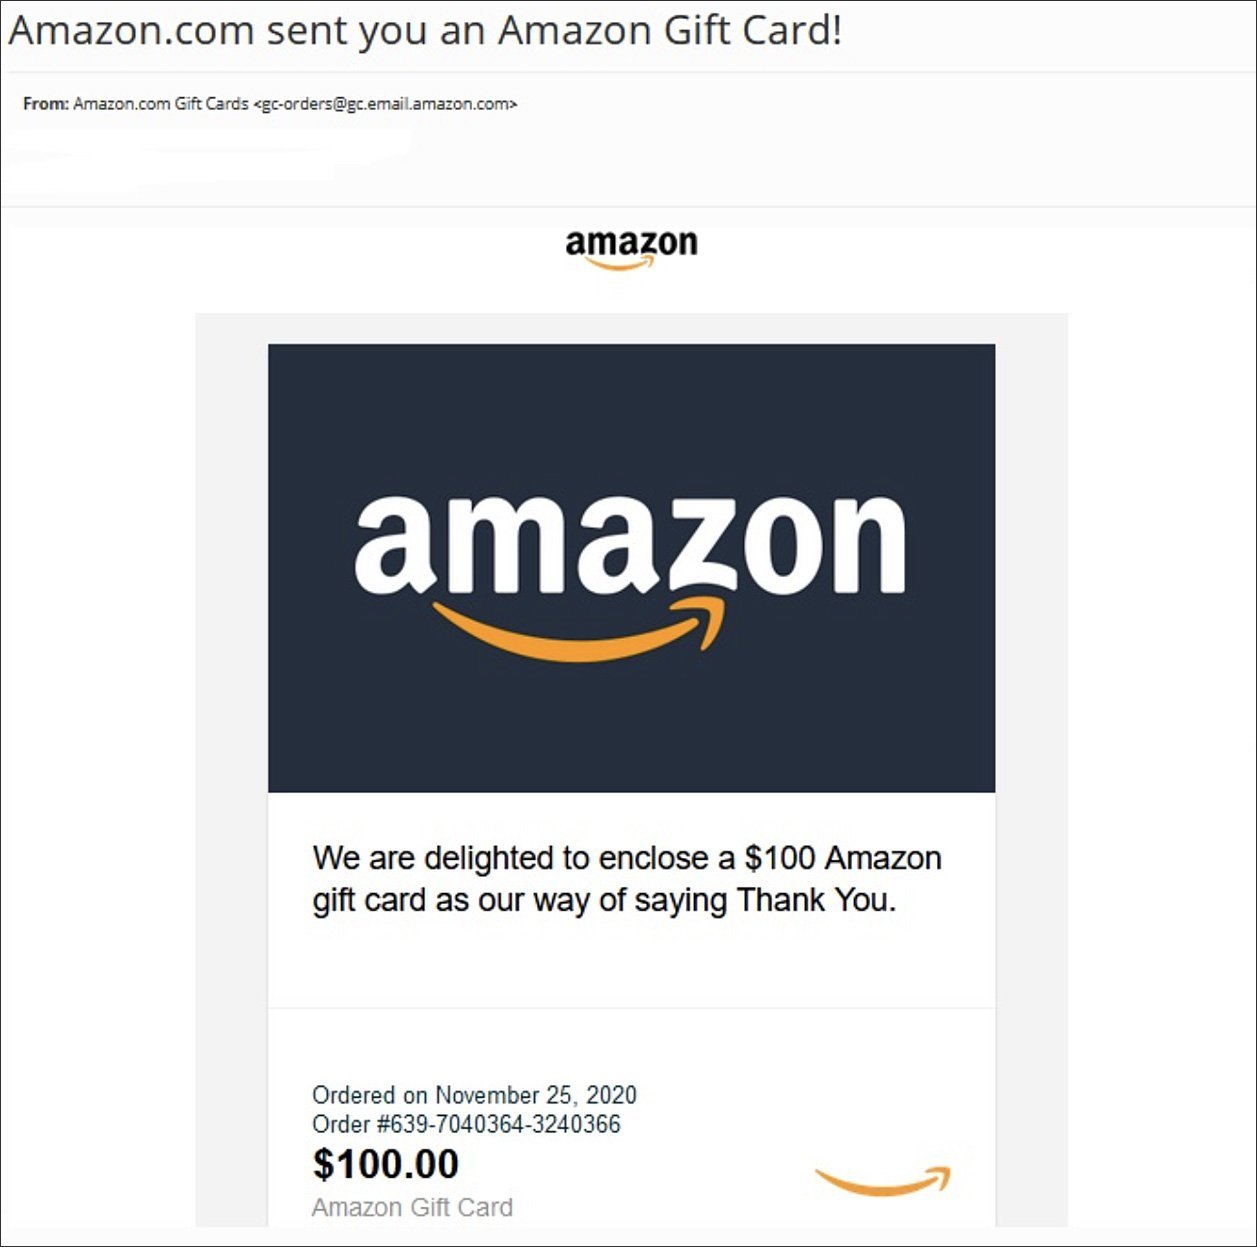 Amazon gift card phishing email